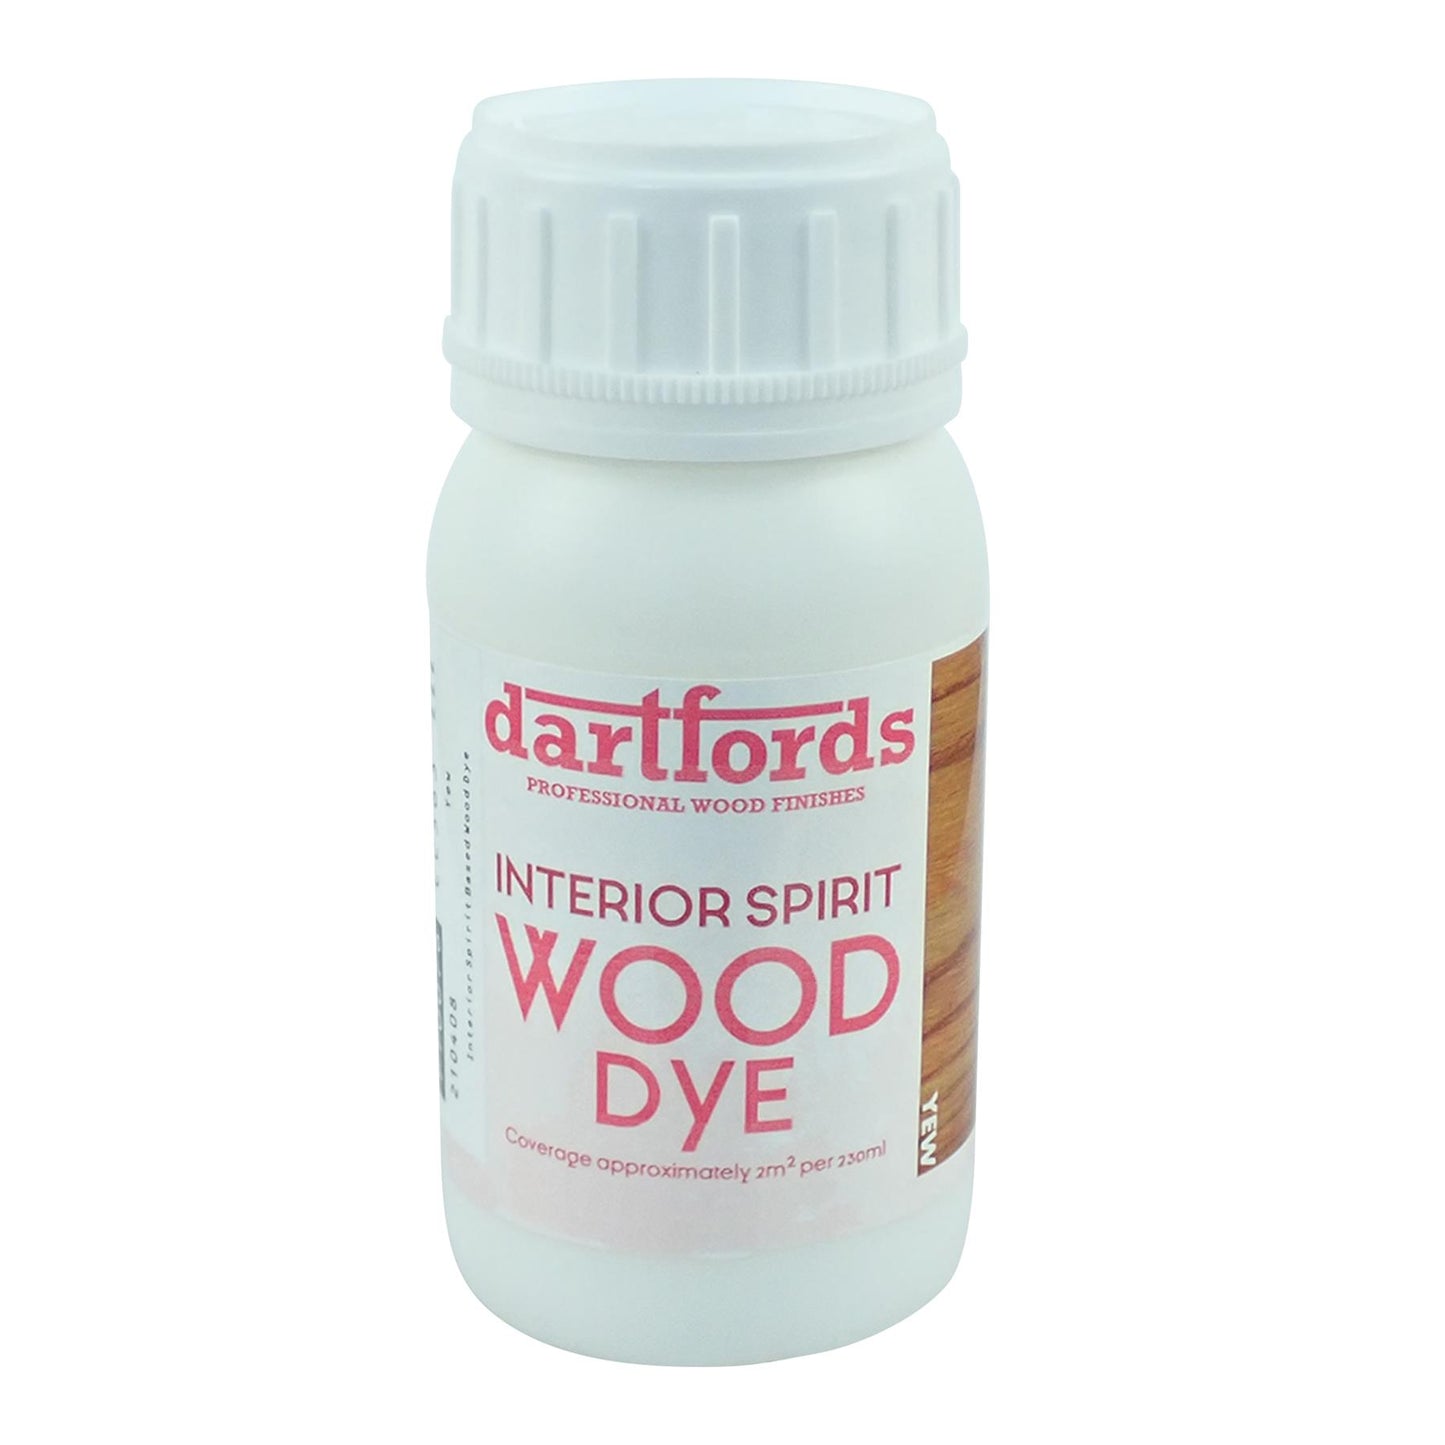 dartfords Yew Interior Spirit Based Wood Dye - 230ml Tin